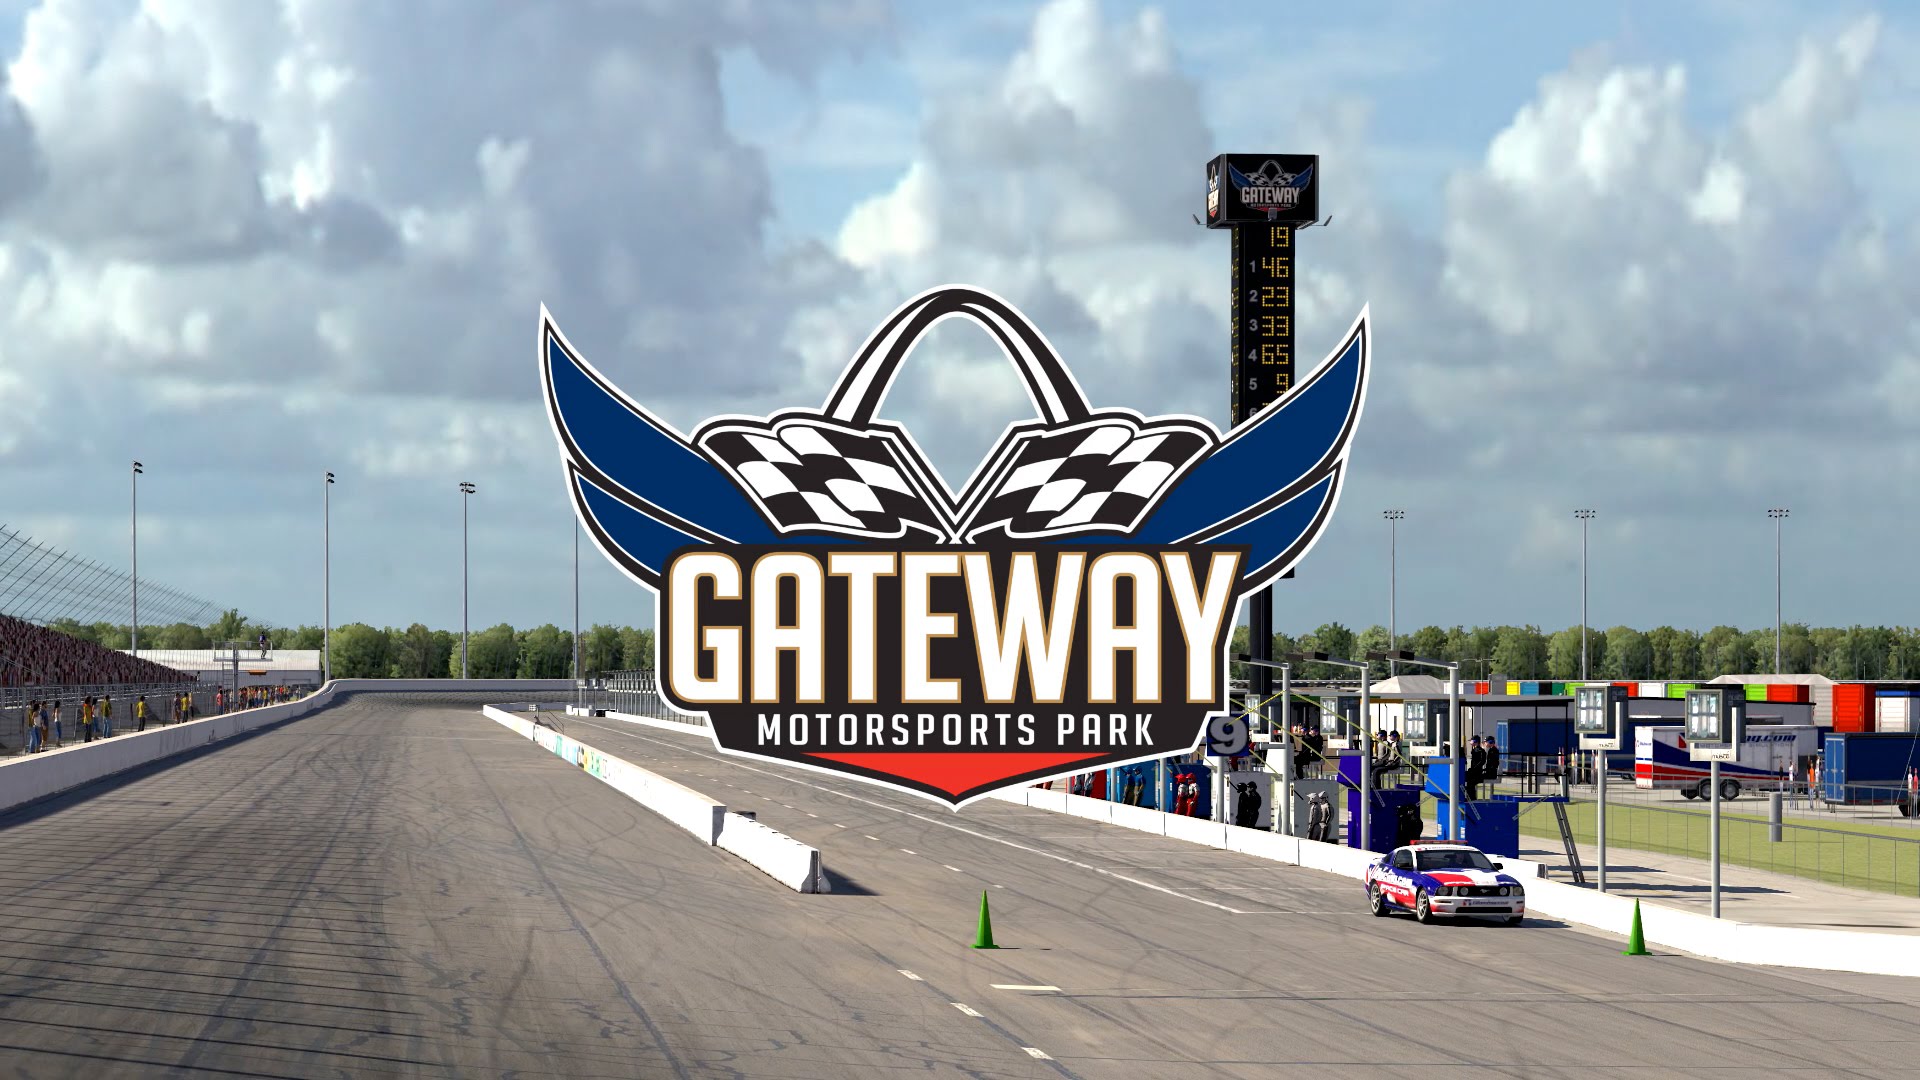 Gateway Motorsports Park